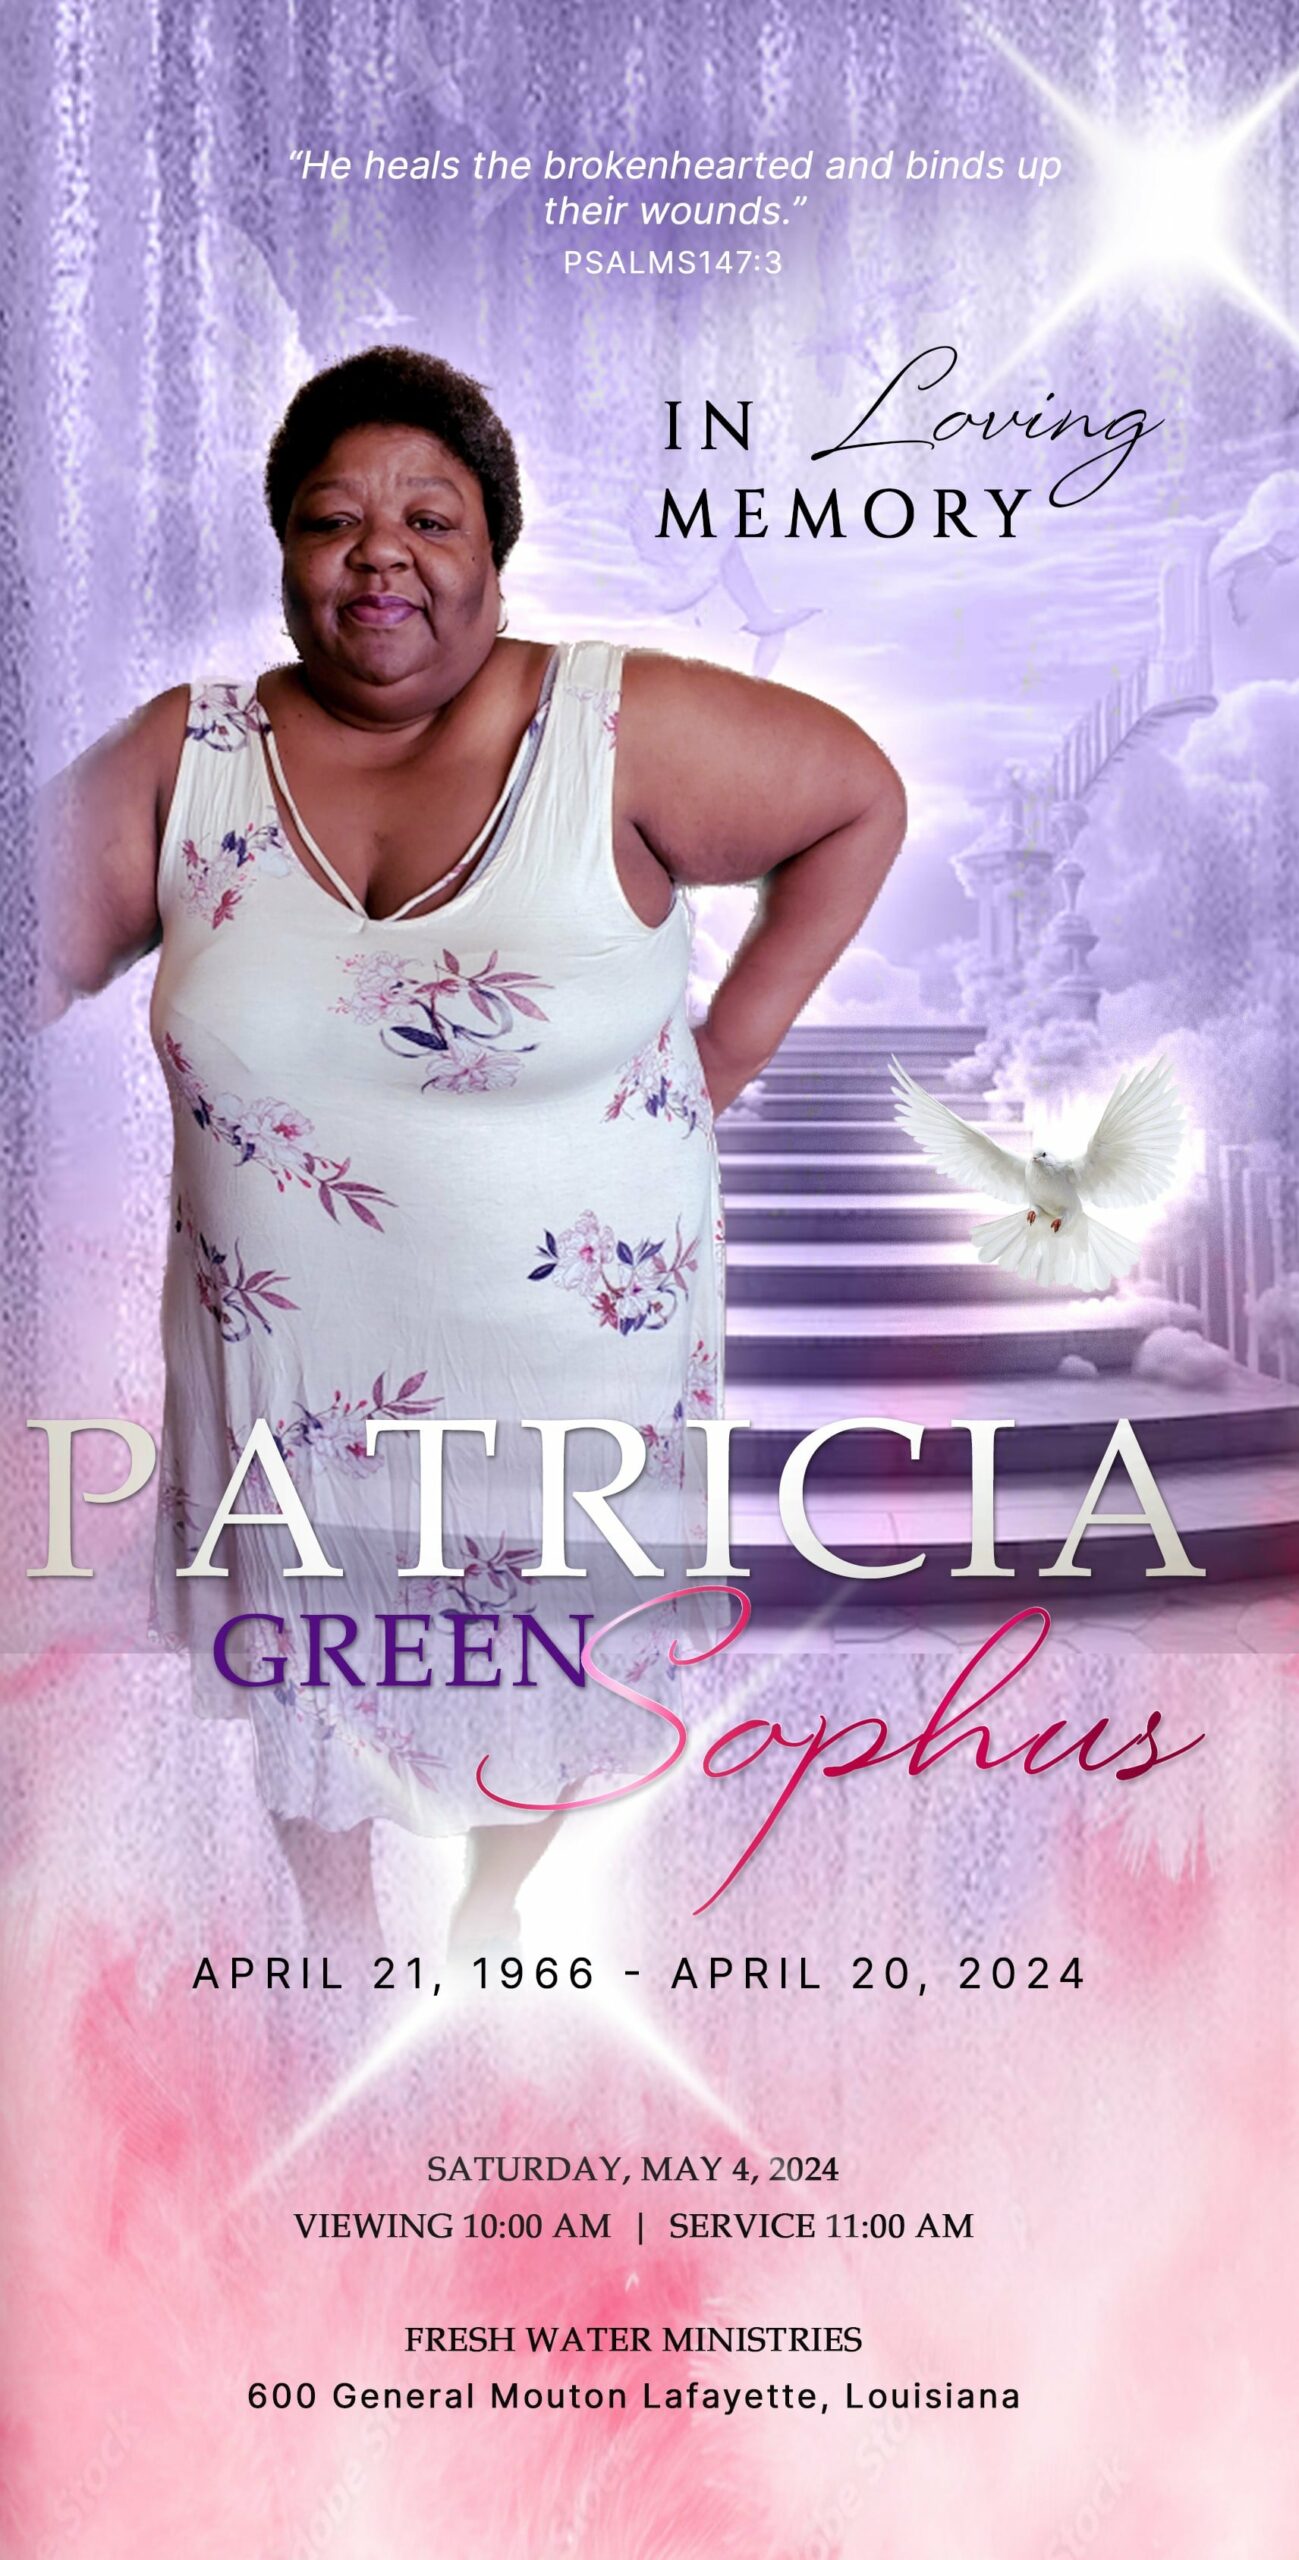 Patricia Green Sophus 1966 – 2024